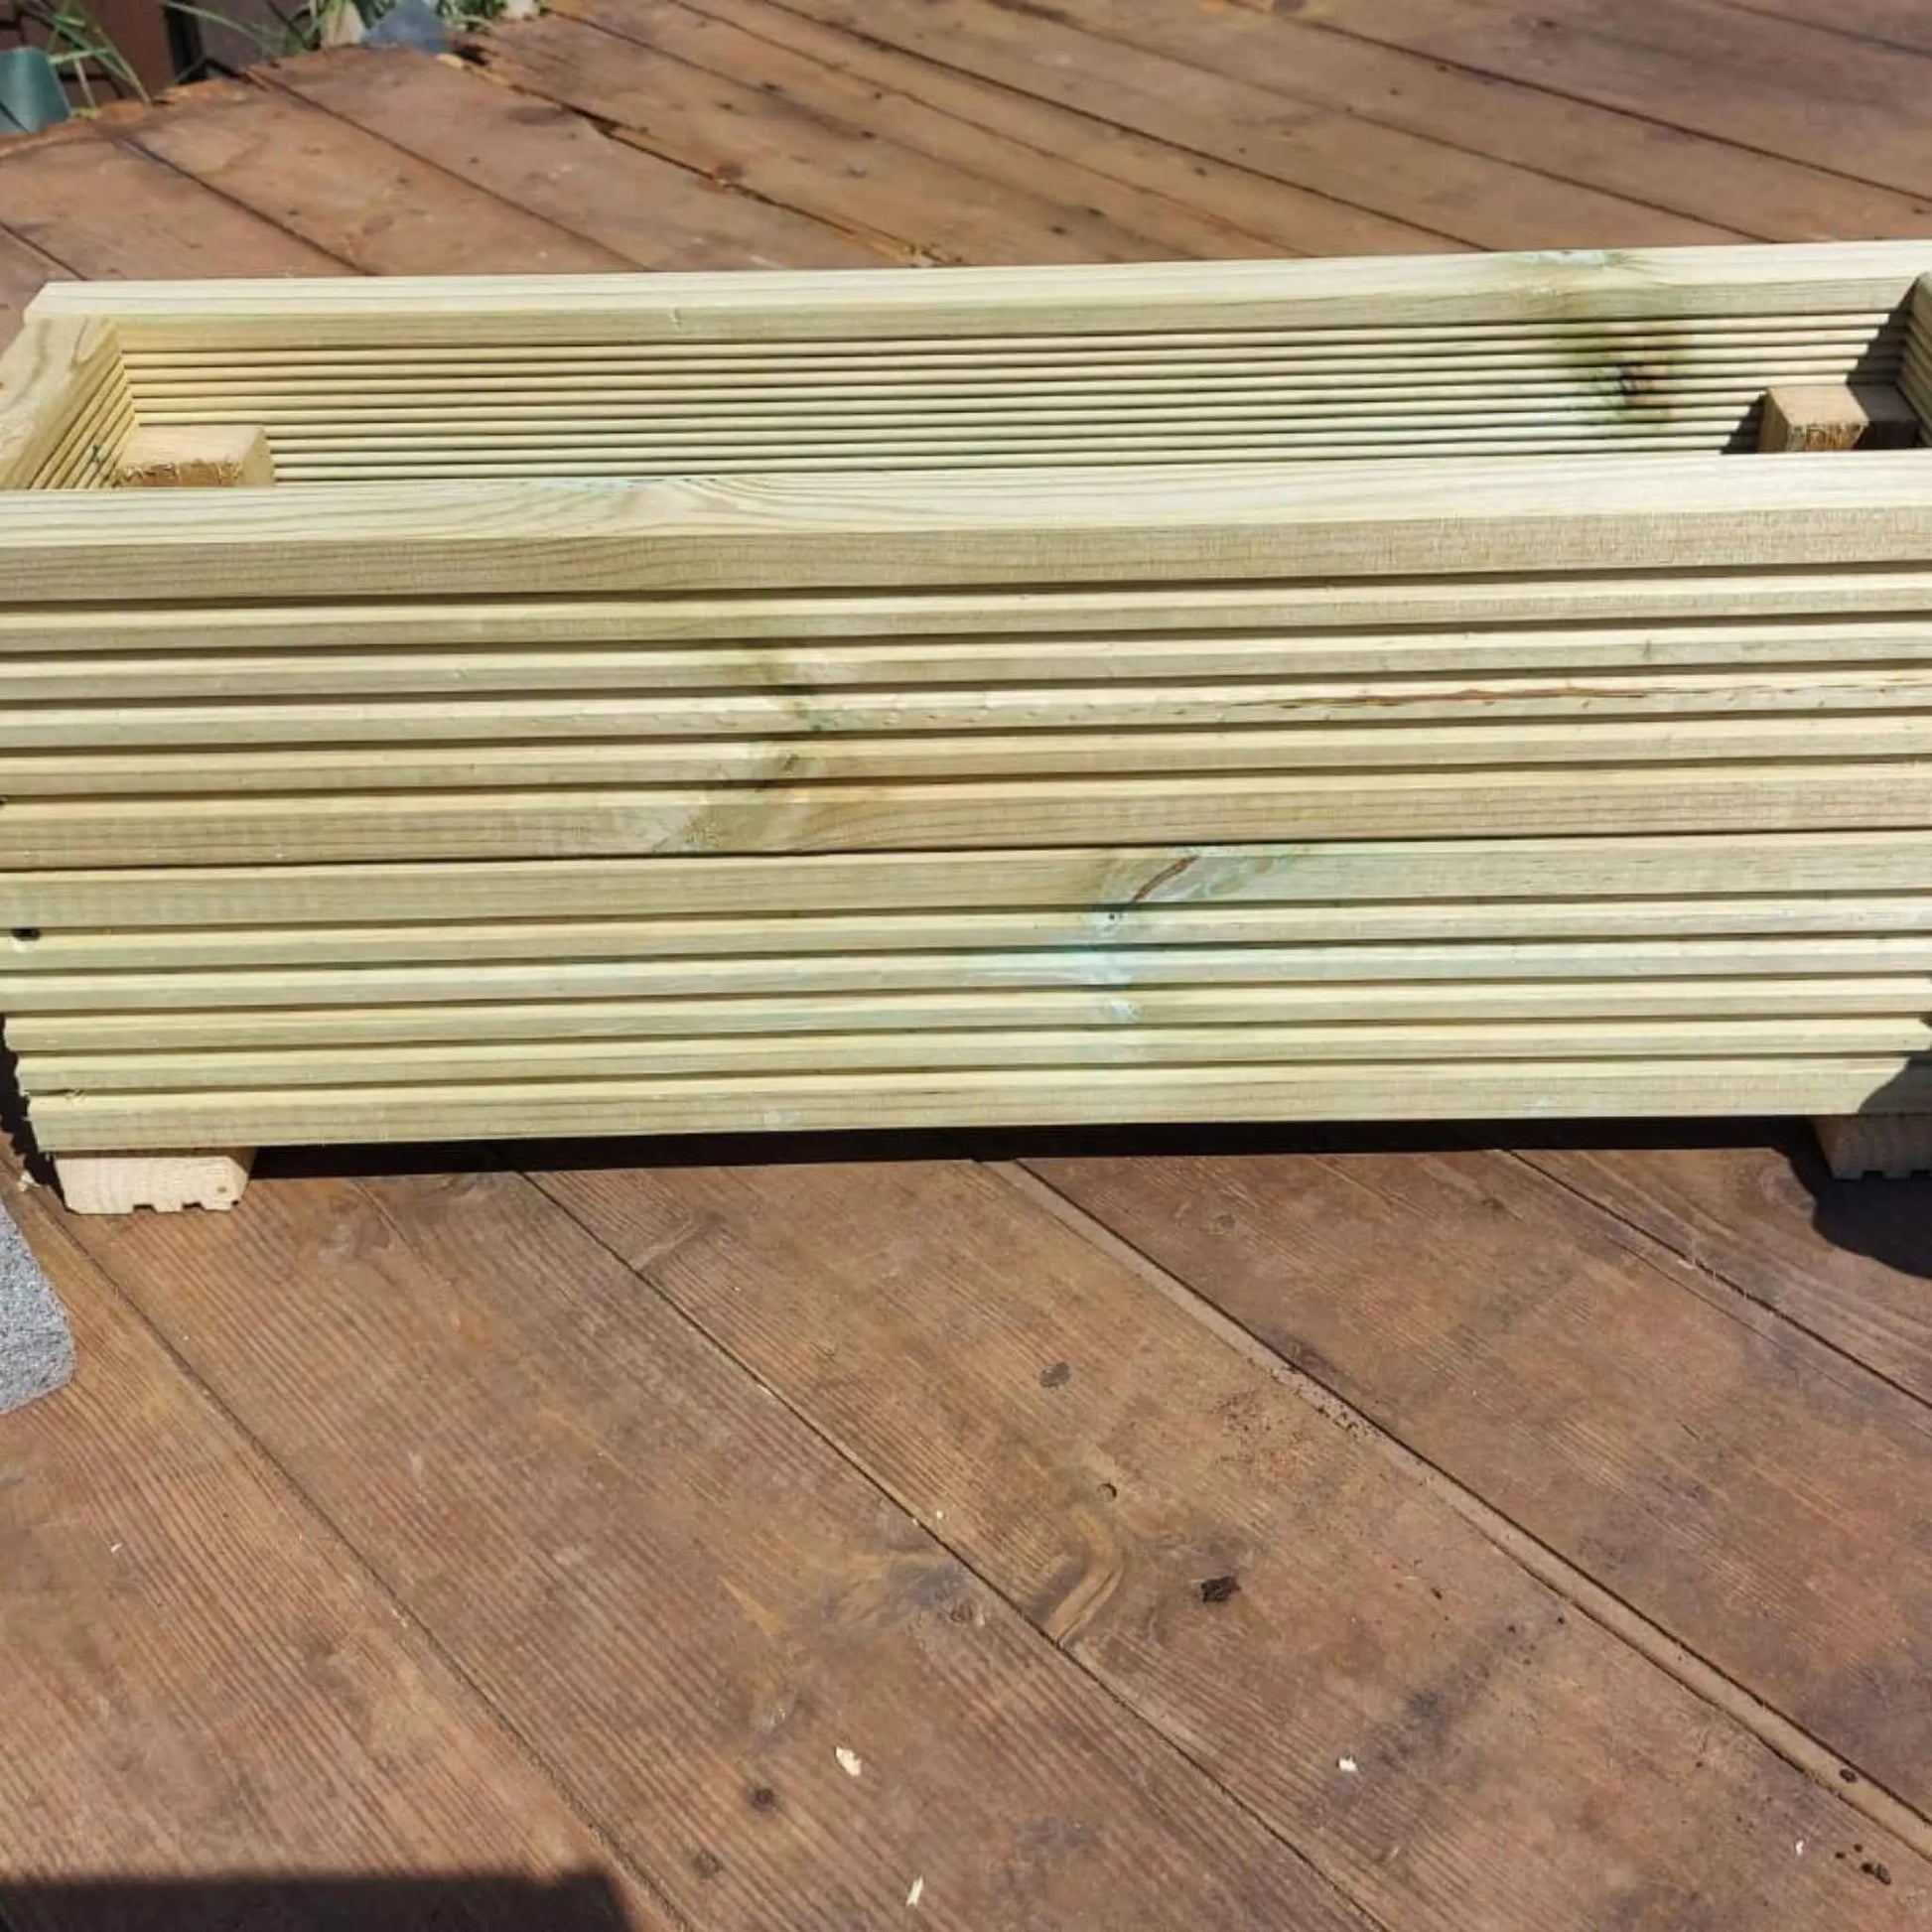 70cm long double tier wooden decking planter - Summer Wooden Planters